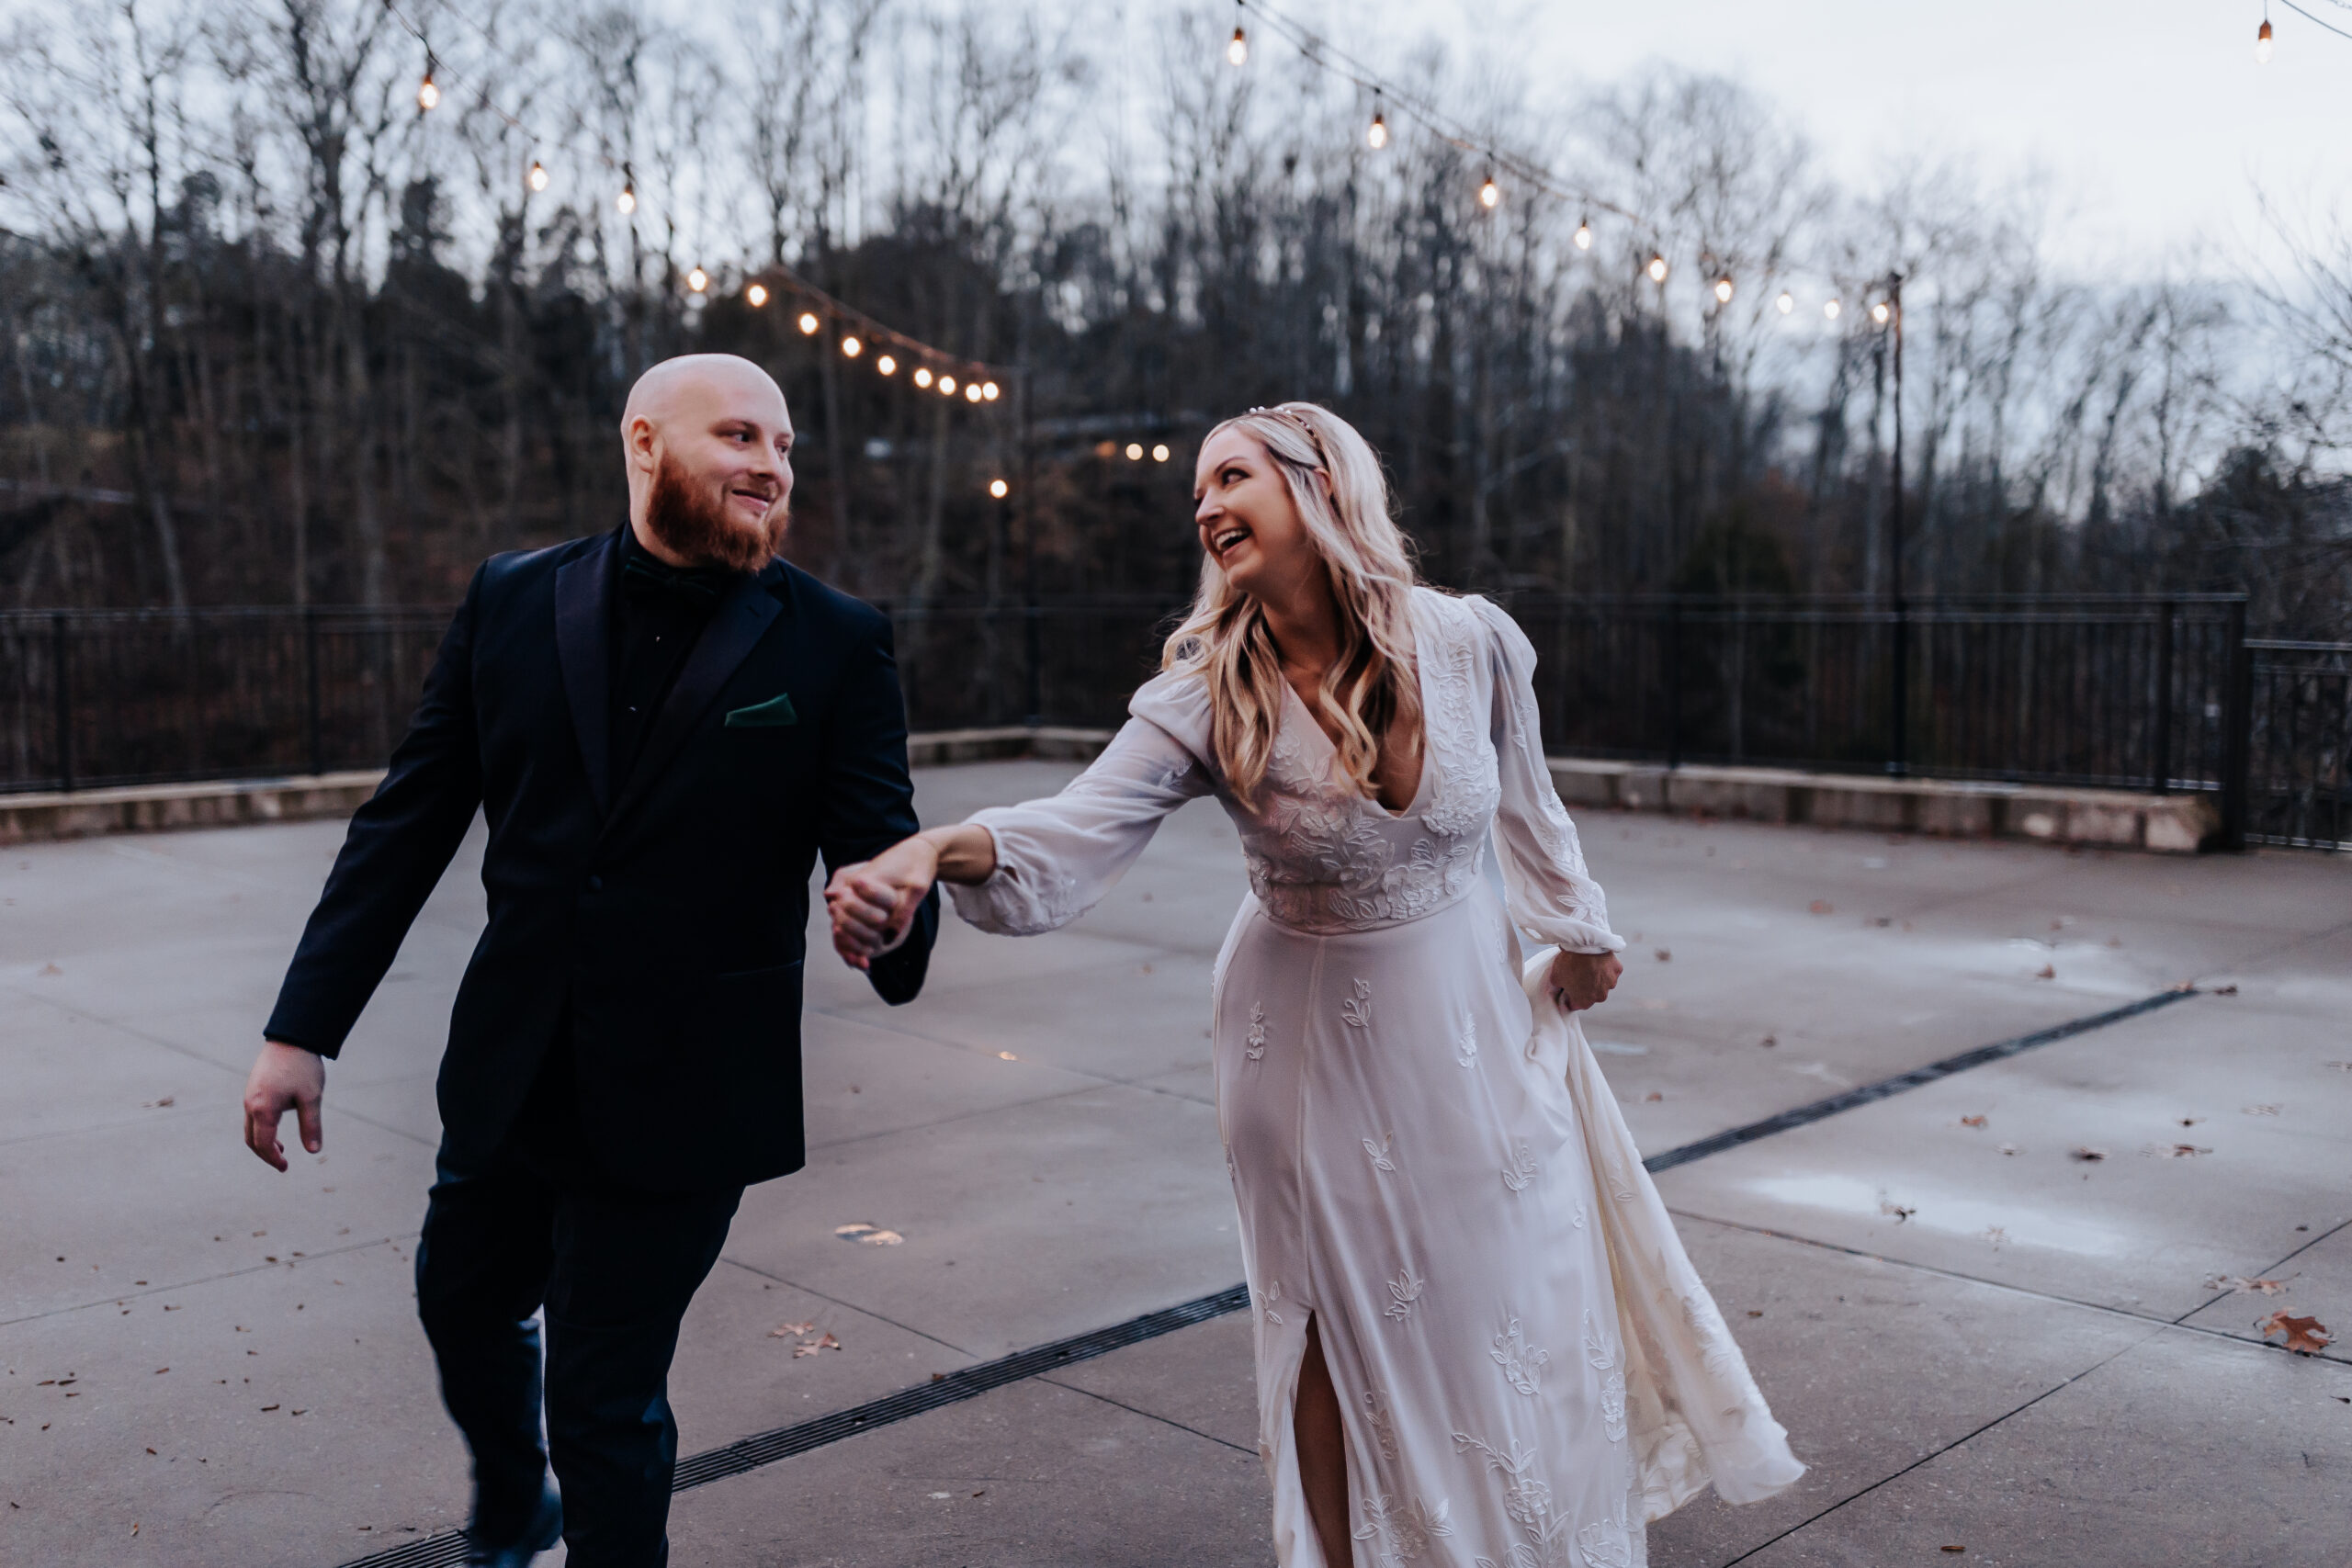 Nashville elopement photographer captures bride and groom walking together and holding hands